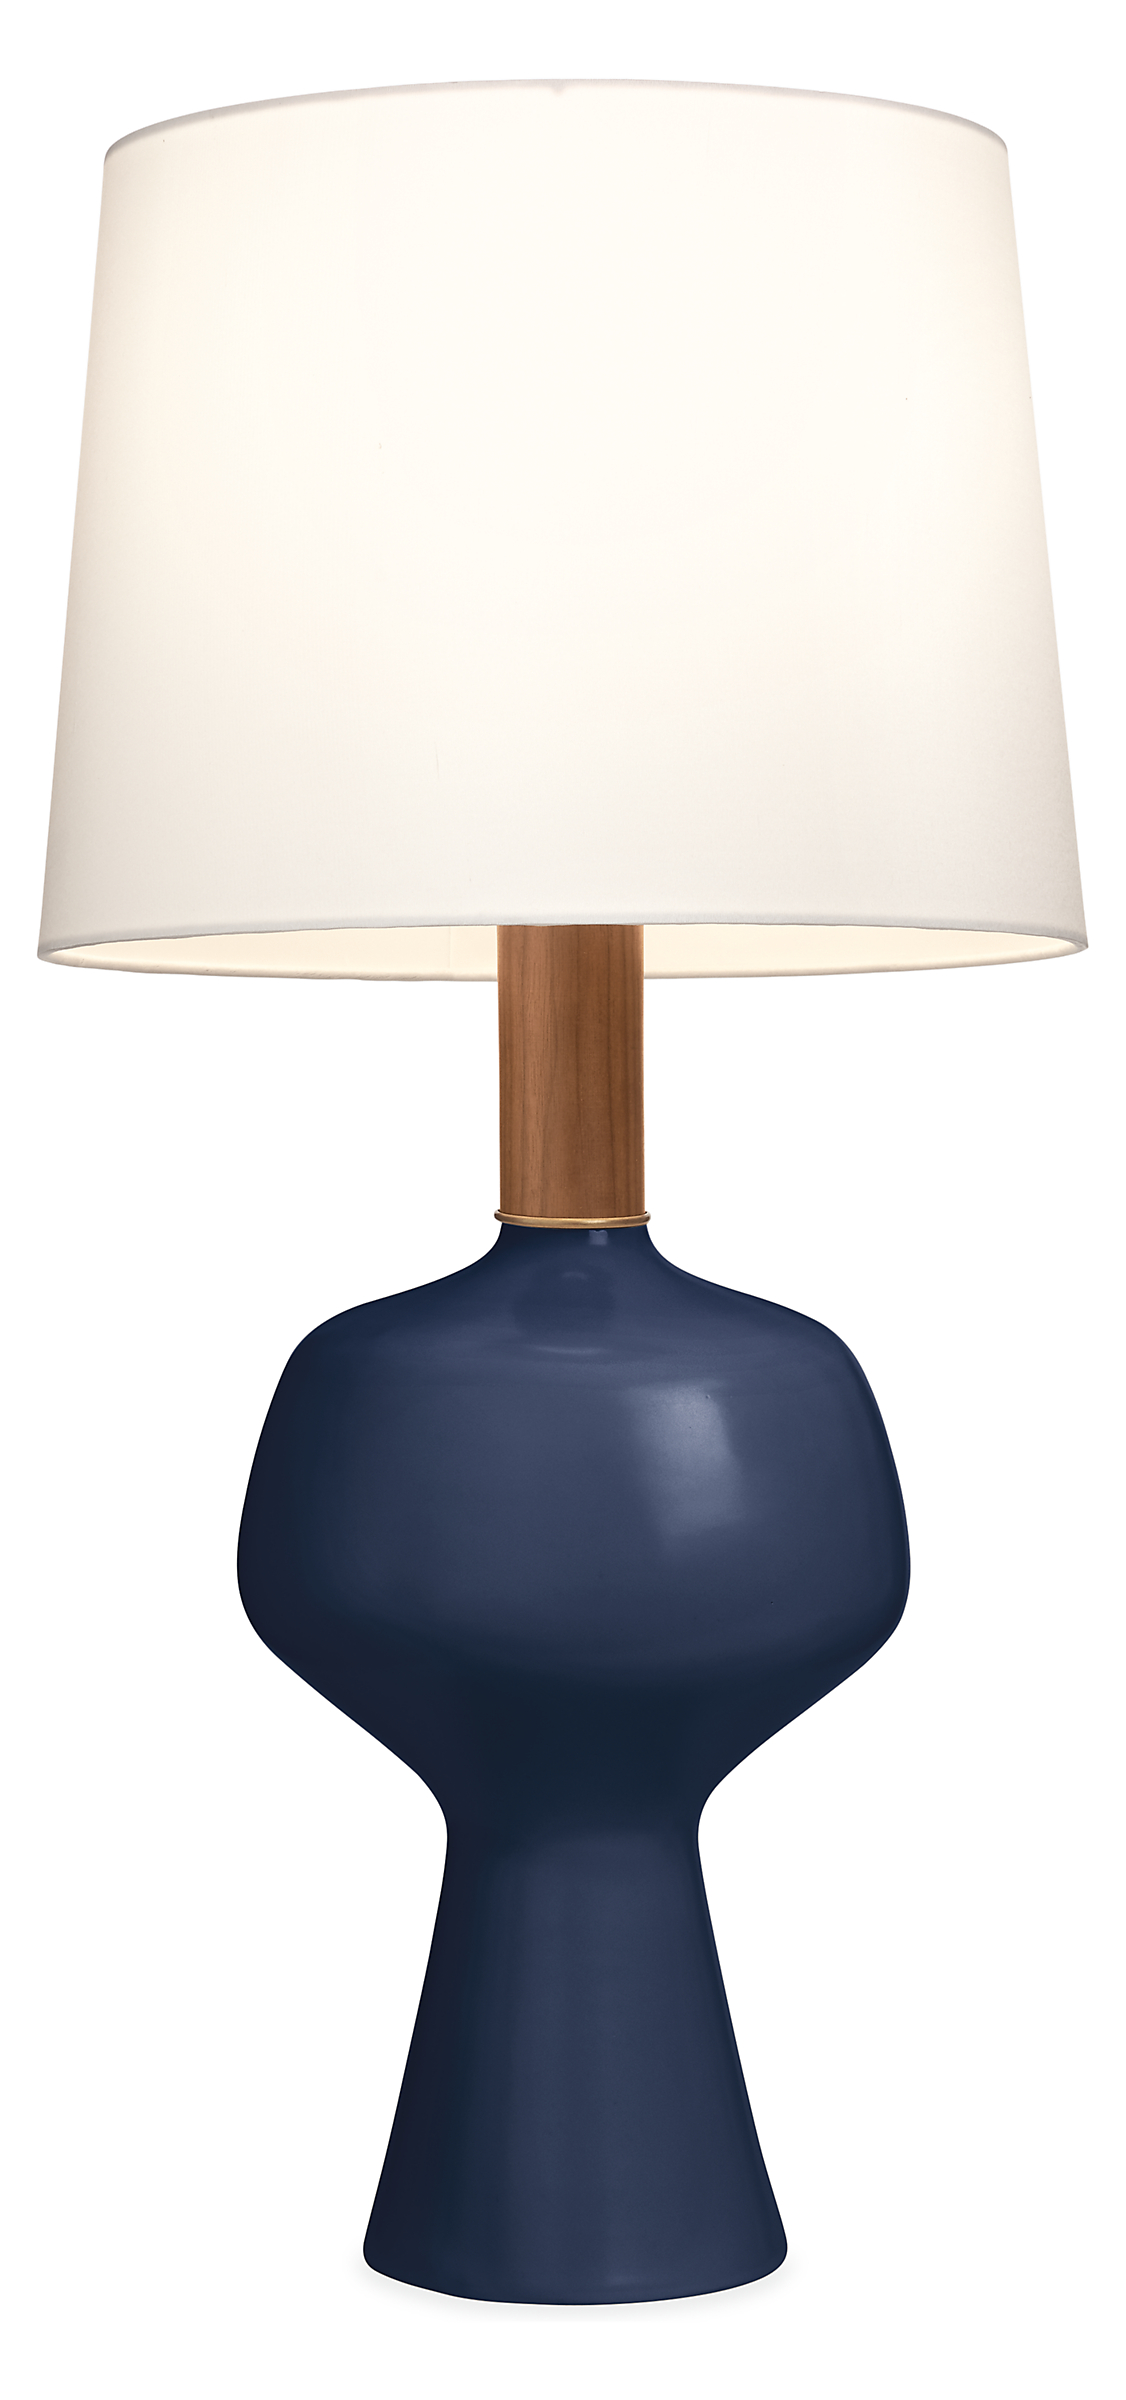 Althea Table Lamp